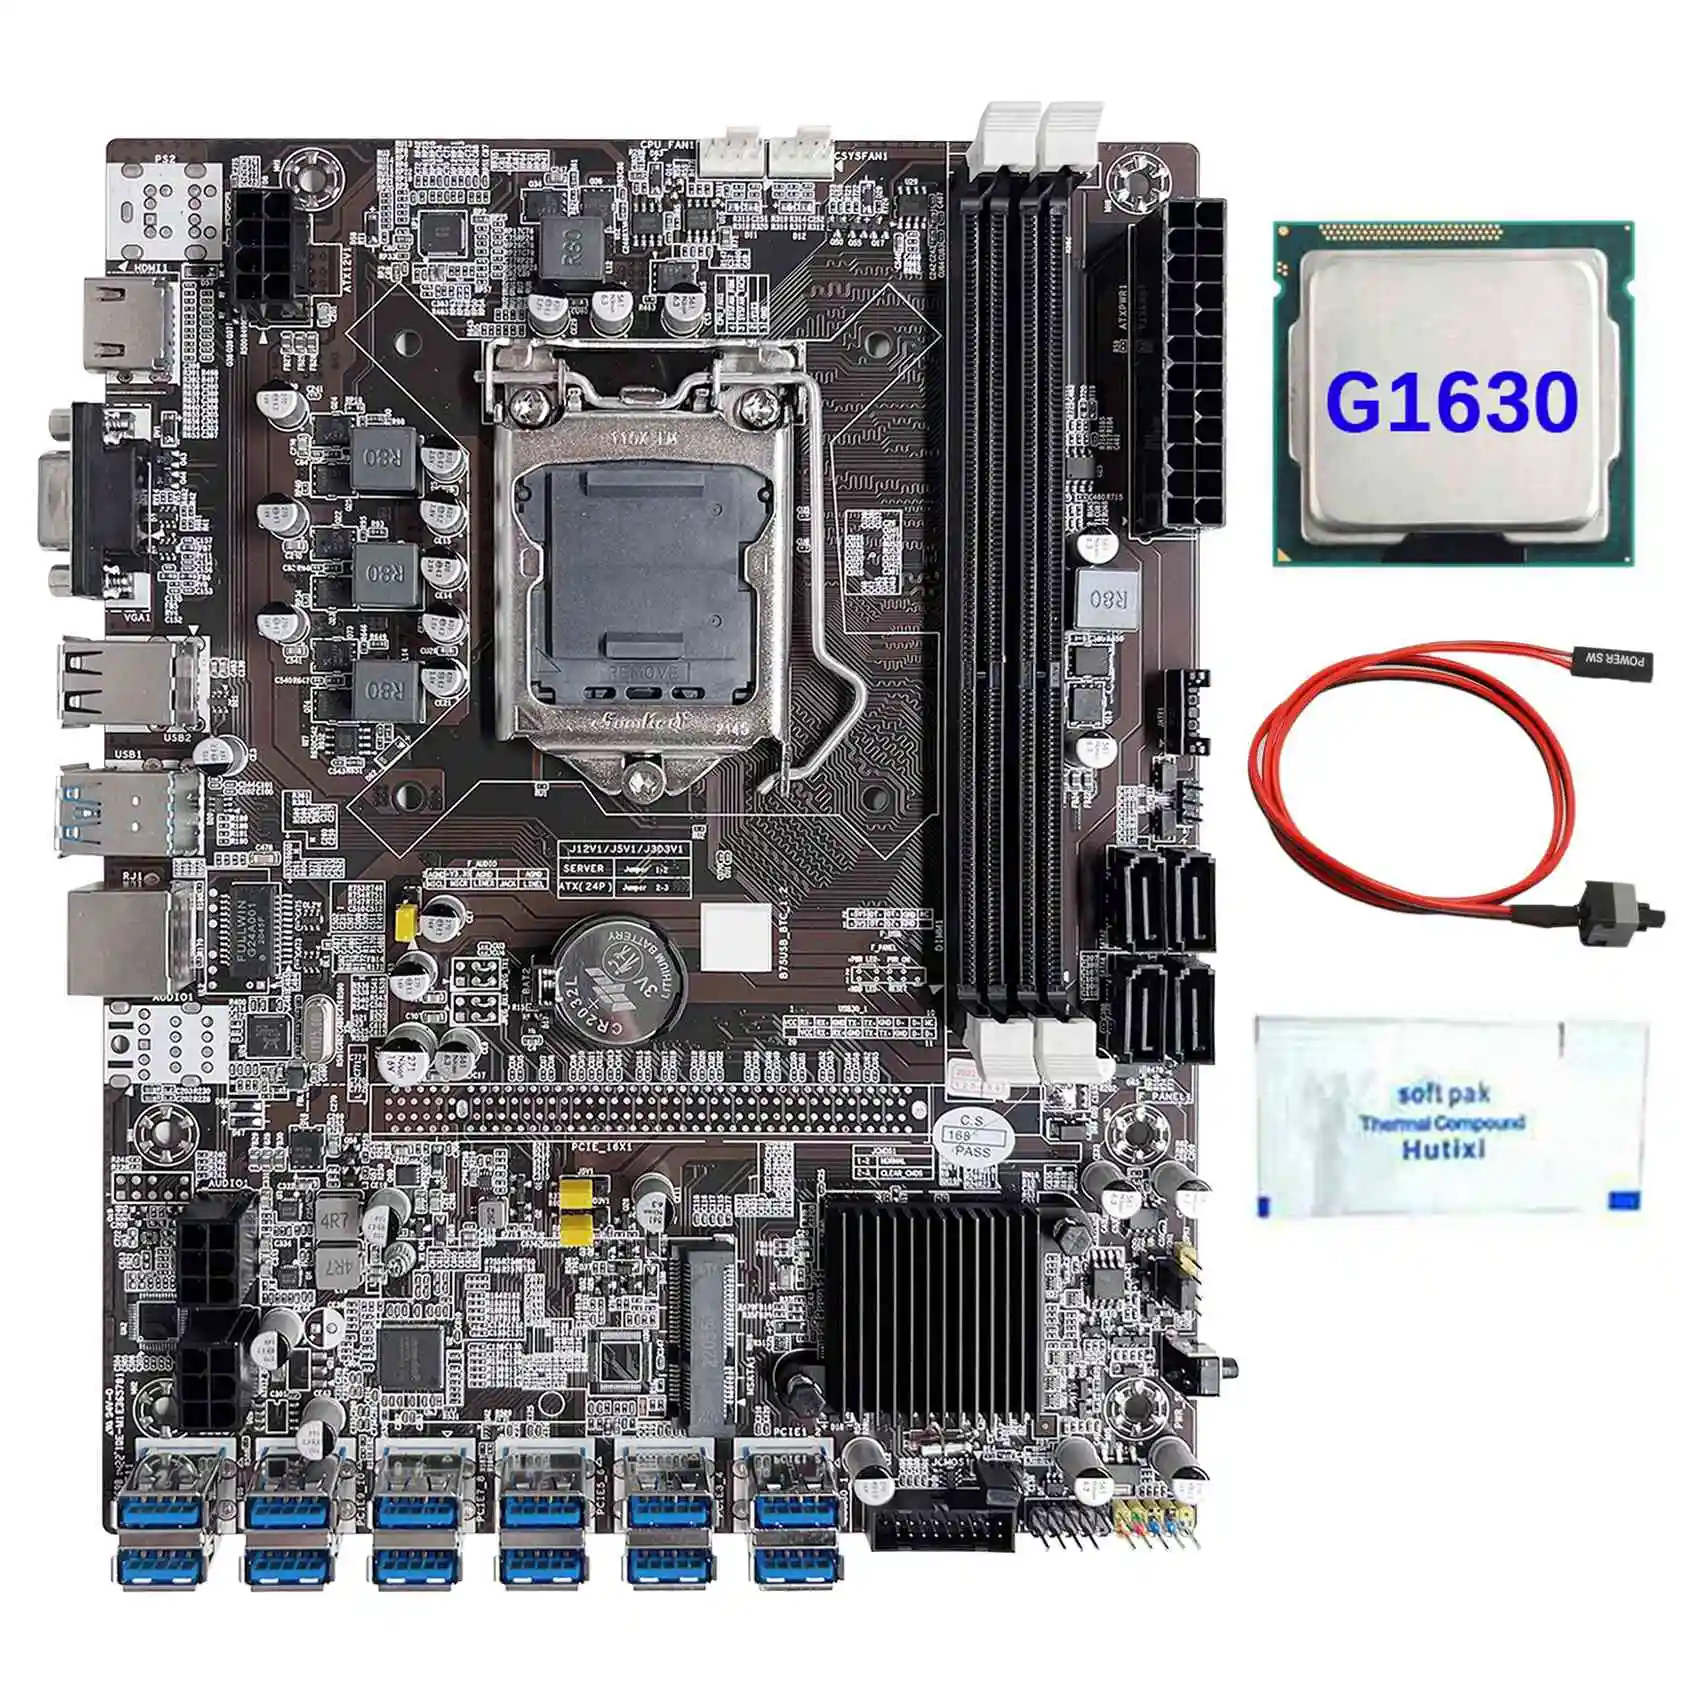 B75 12 Card GPU BTC Mining Motherboard+G1630 CPU+Thermal Grease+Switch Cable 12XUSB3.0(PCIE) Slot LGA1155 DDR3 RAM MSATA